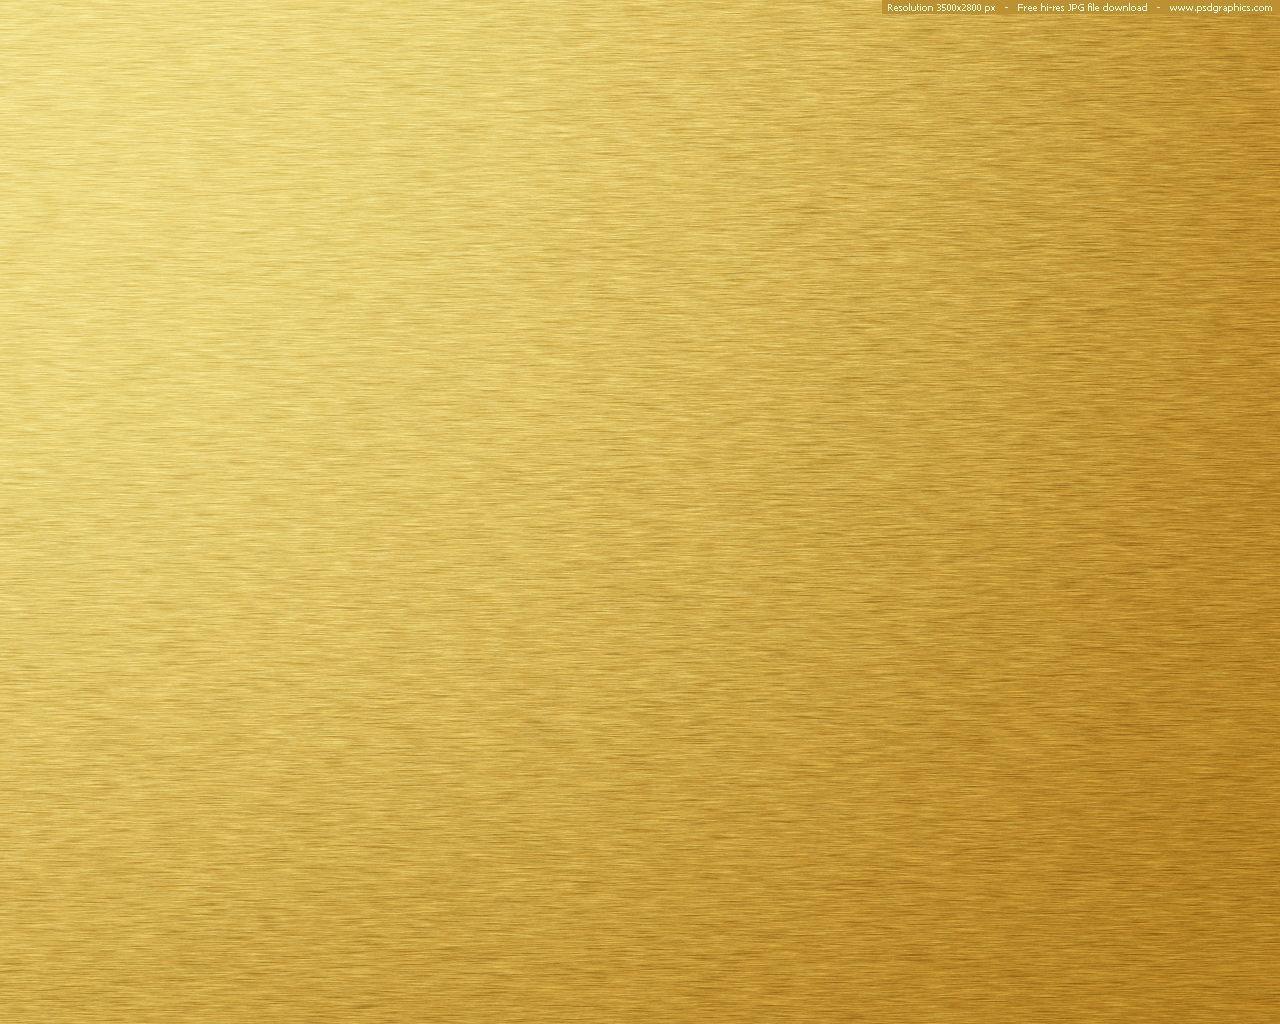 Wallpaper Desktop Shiny Gold Textures 5688 X 4000 2973 Kb Jpeg